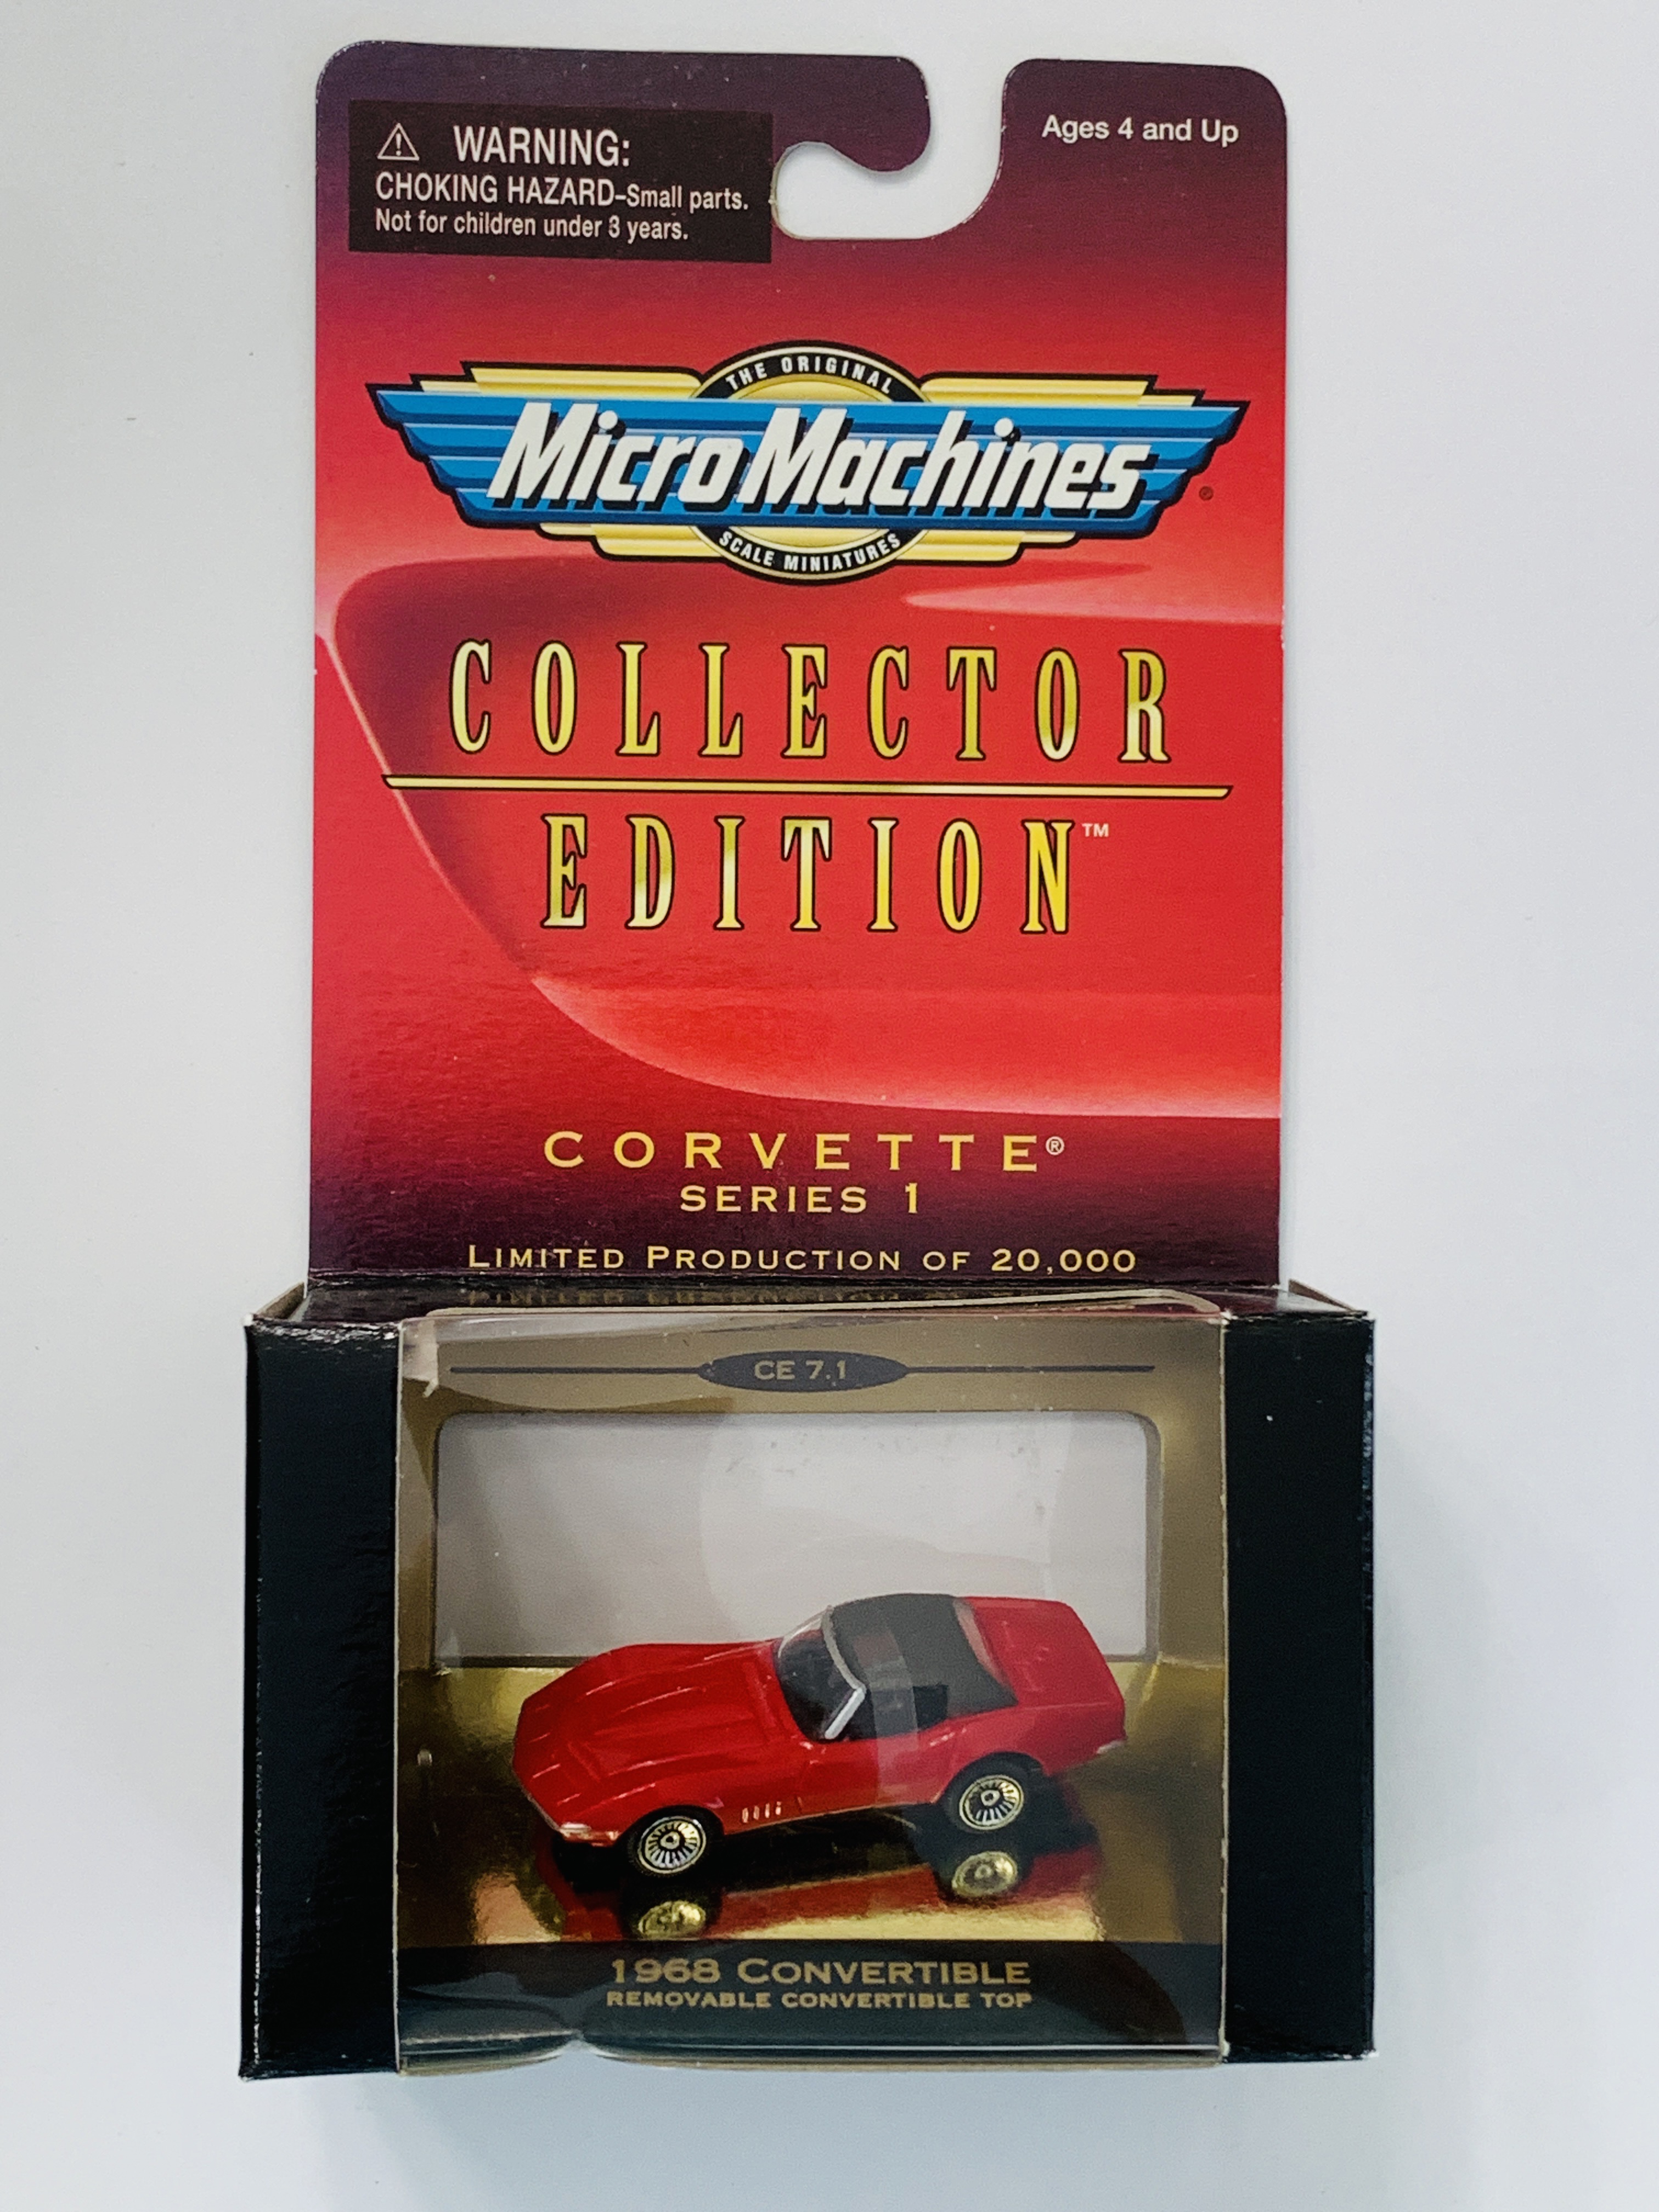 Micro Machines Collector Edition Corvette Series 1 1968 Convertible - Red